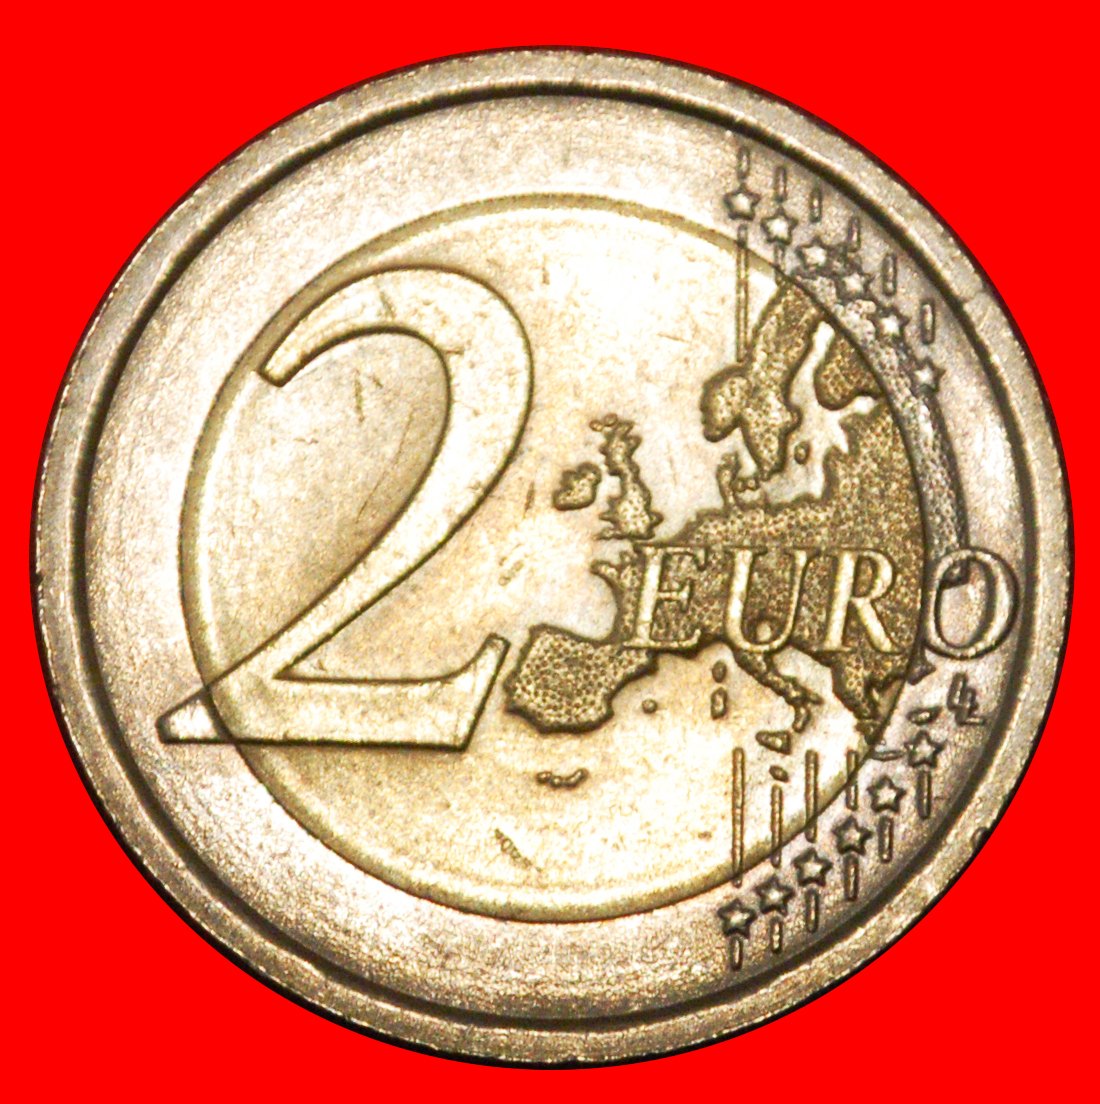  * LEONARDO DA VINCI 1452-1519 POLAND: ITALY ★ 2 EURO 2019R MINT LUSTRE! ★LOW START ★ NO RESERVE!   